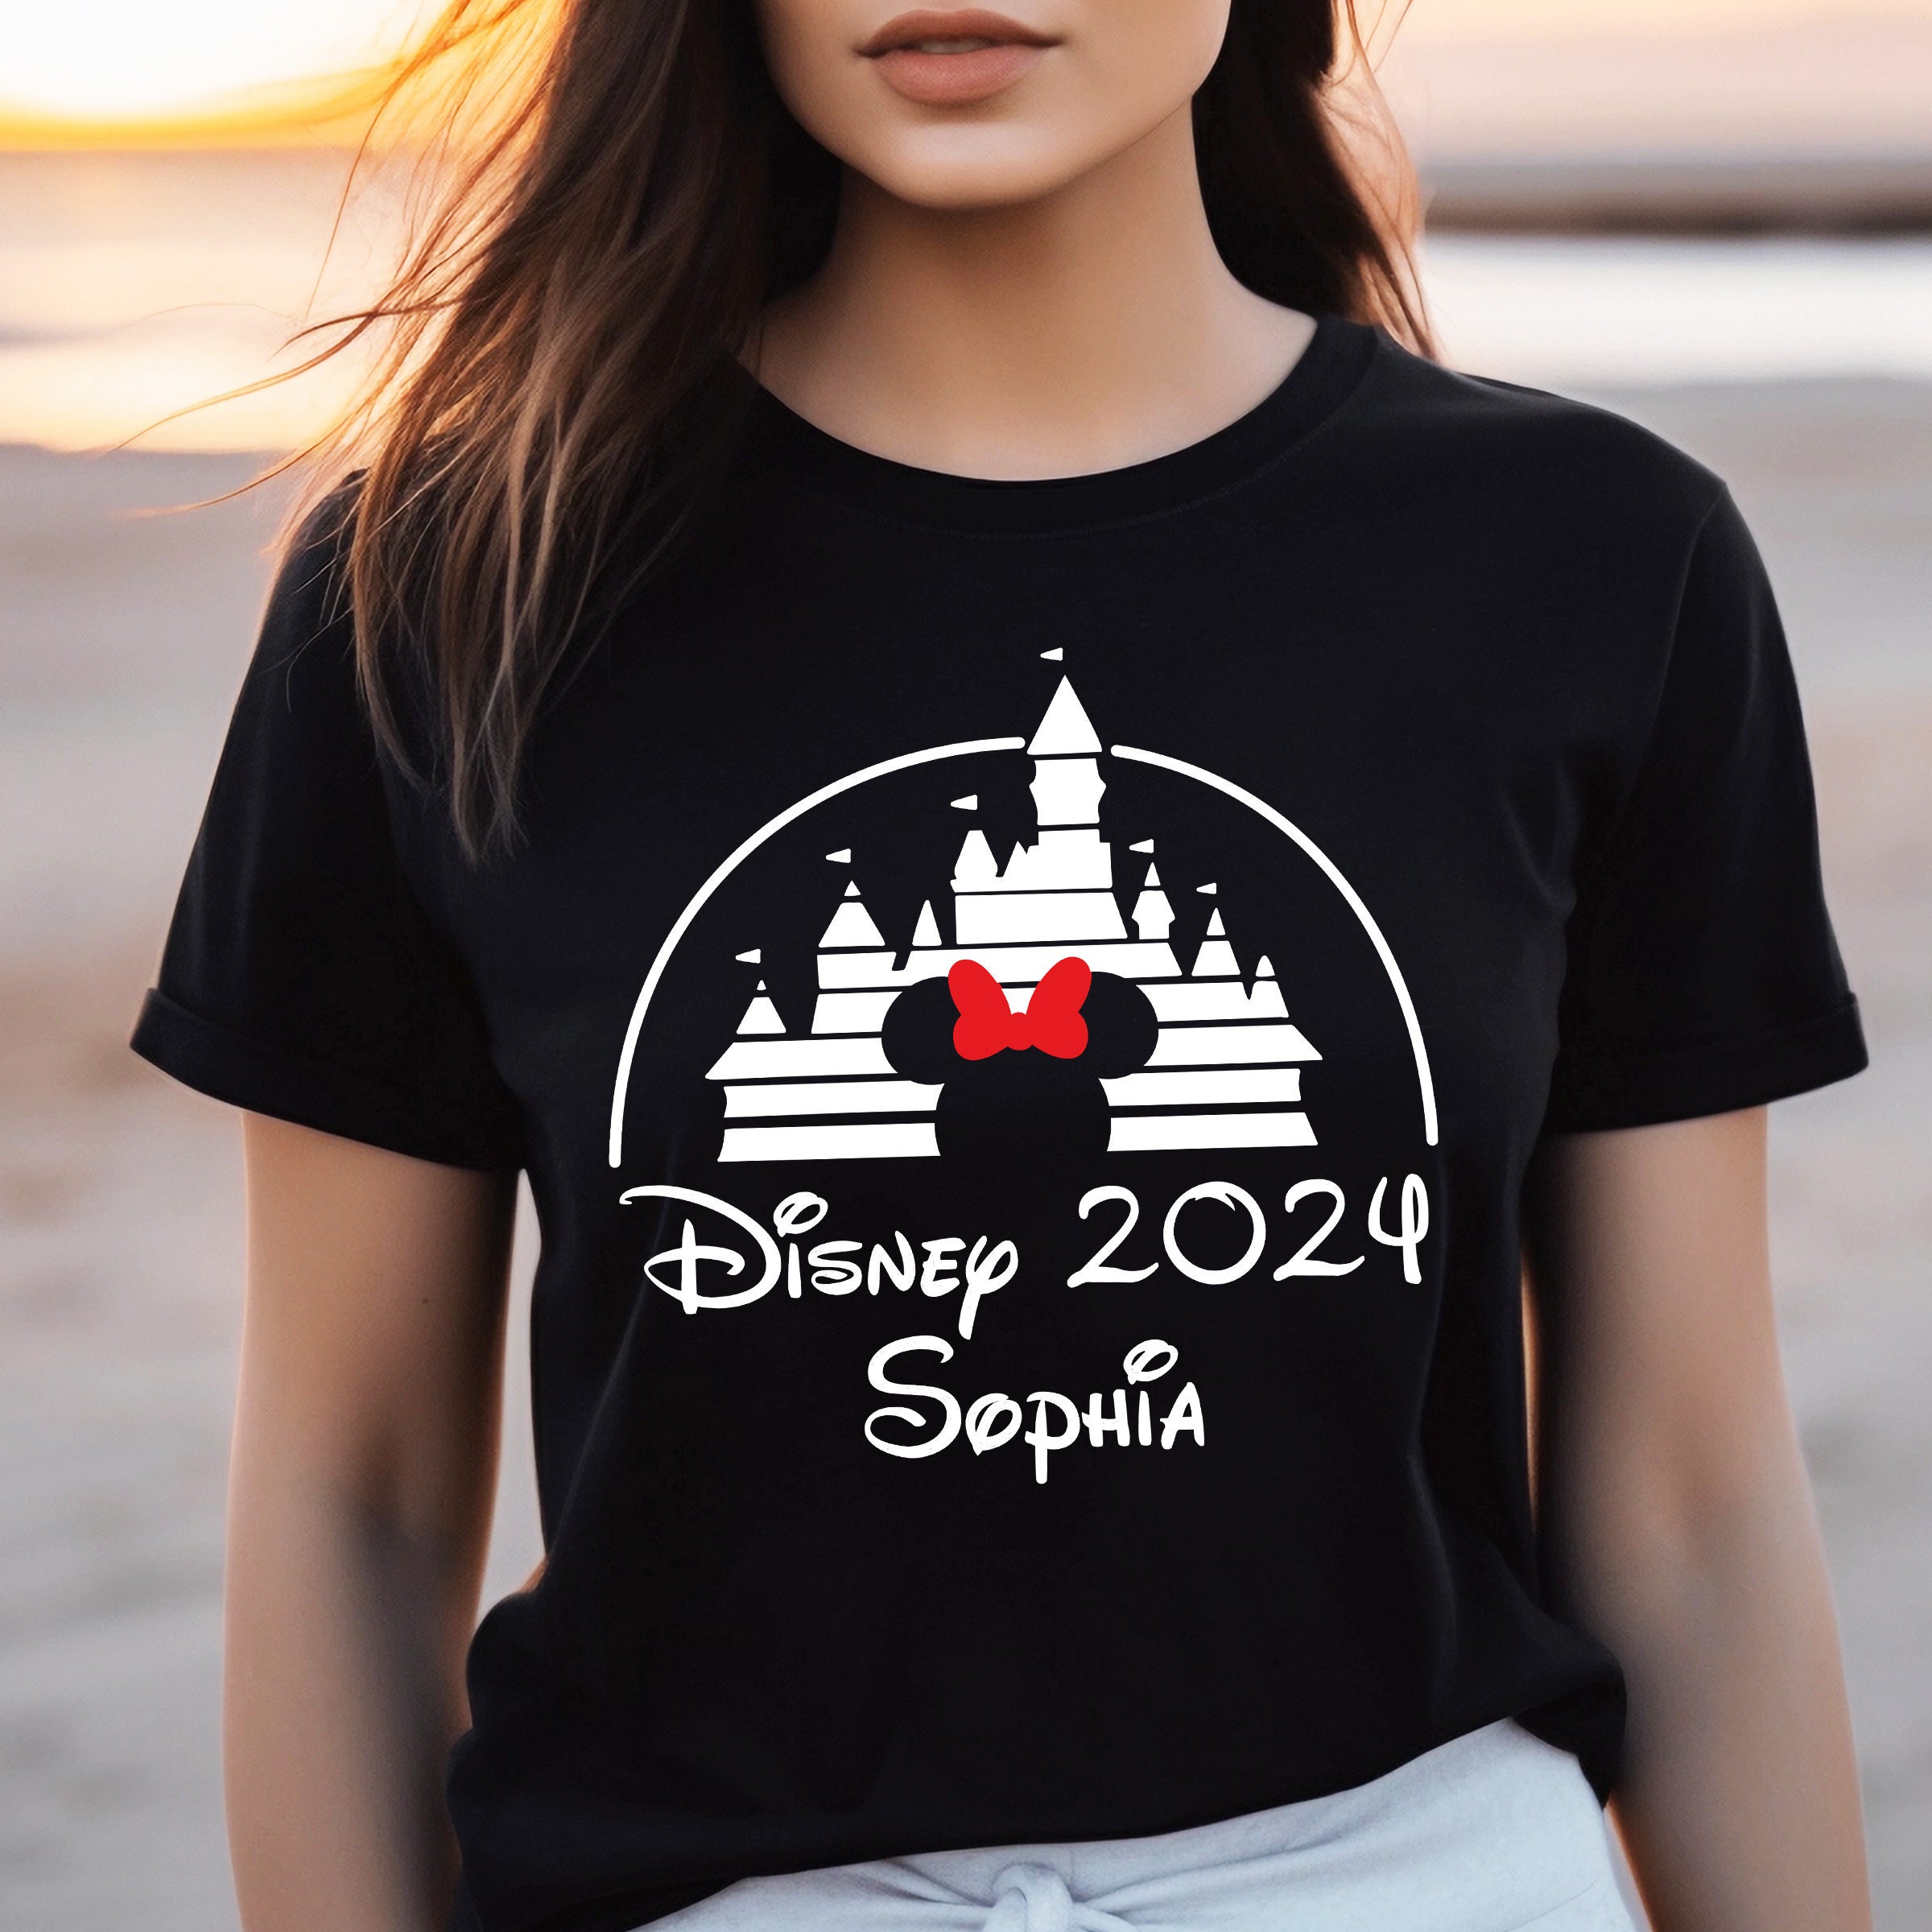 Discover ディズニー ファミリー 2024 メンズ レディース Tシャツ ディズニーランド Anniversary Magic Kingdom ギフト キッズ Disney Family